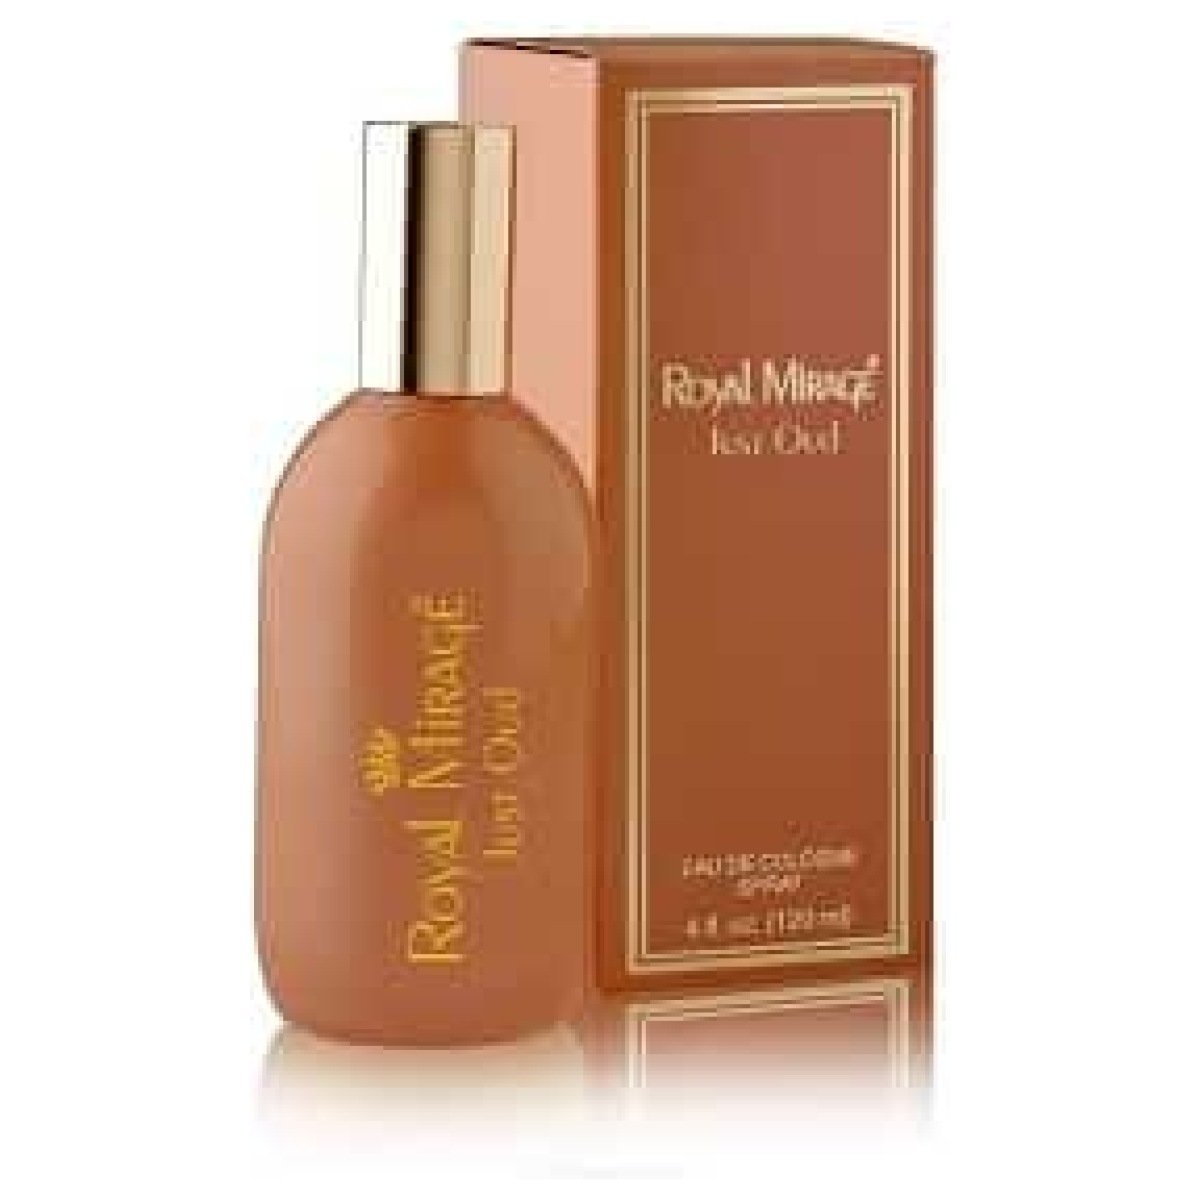 Royal Mirage Just Oud EDC Perfume For Men 120ml